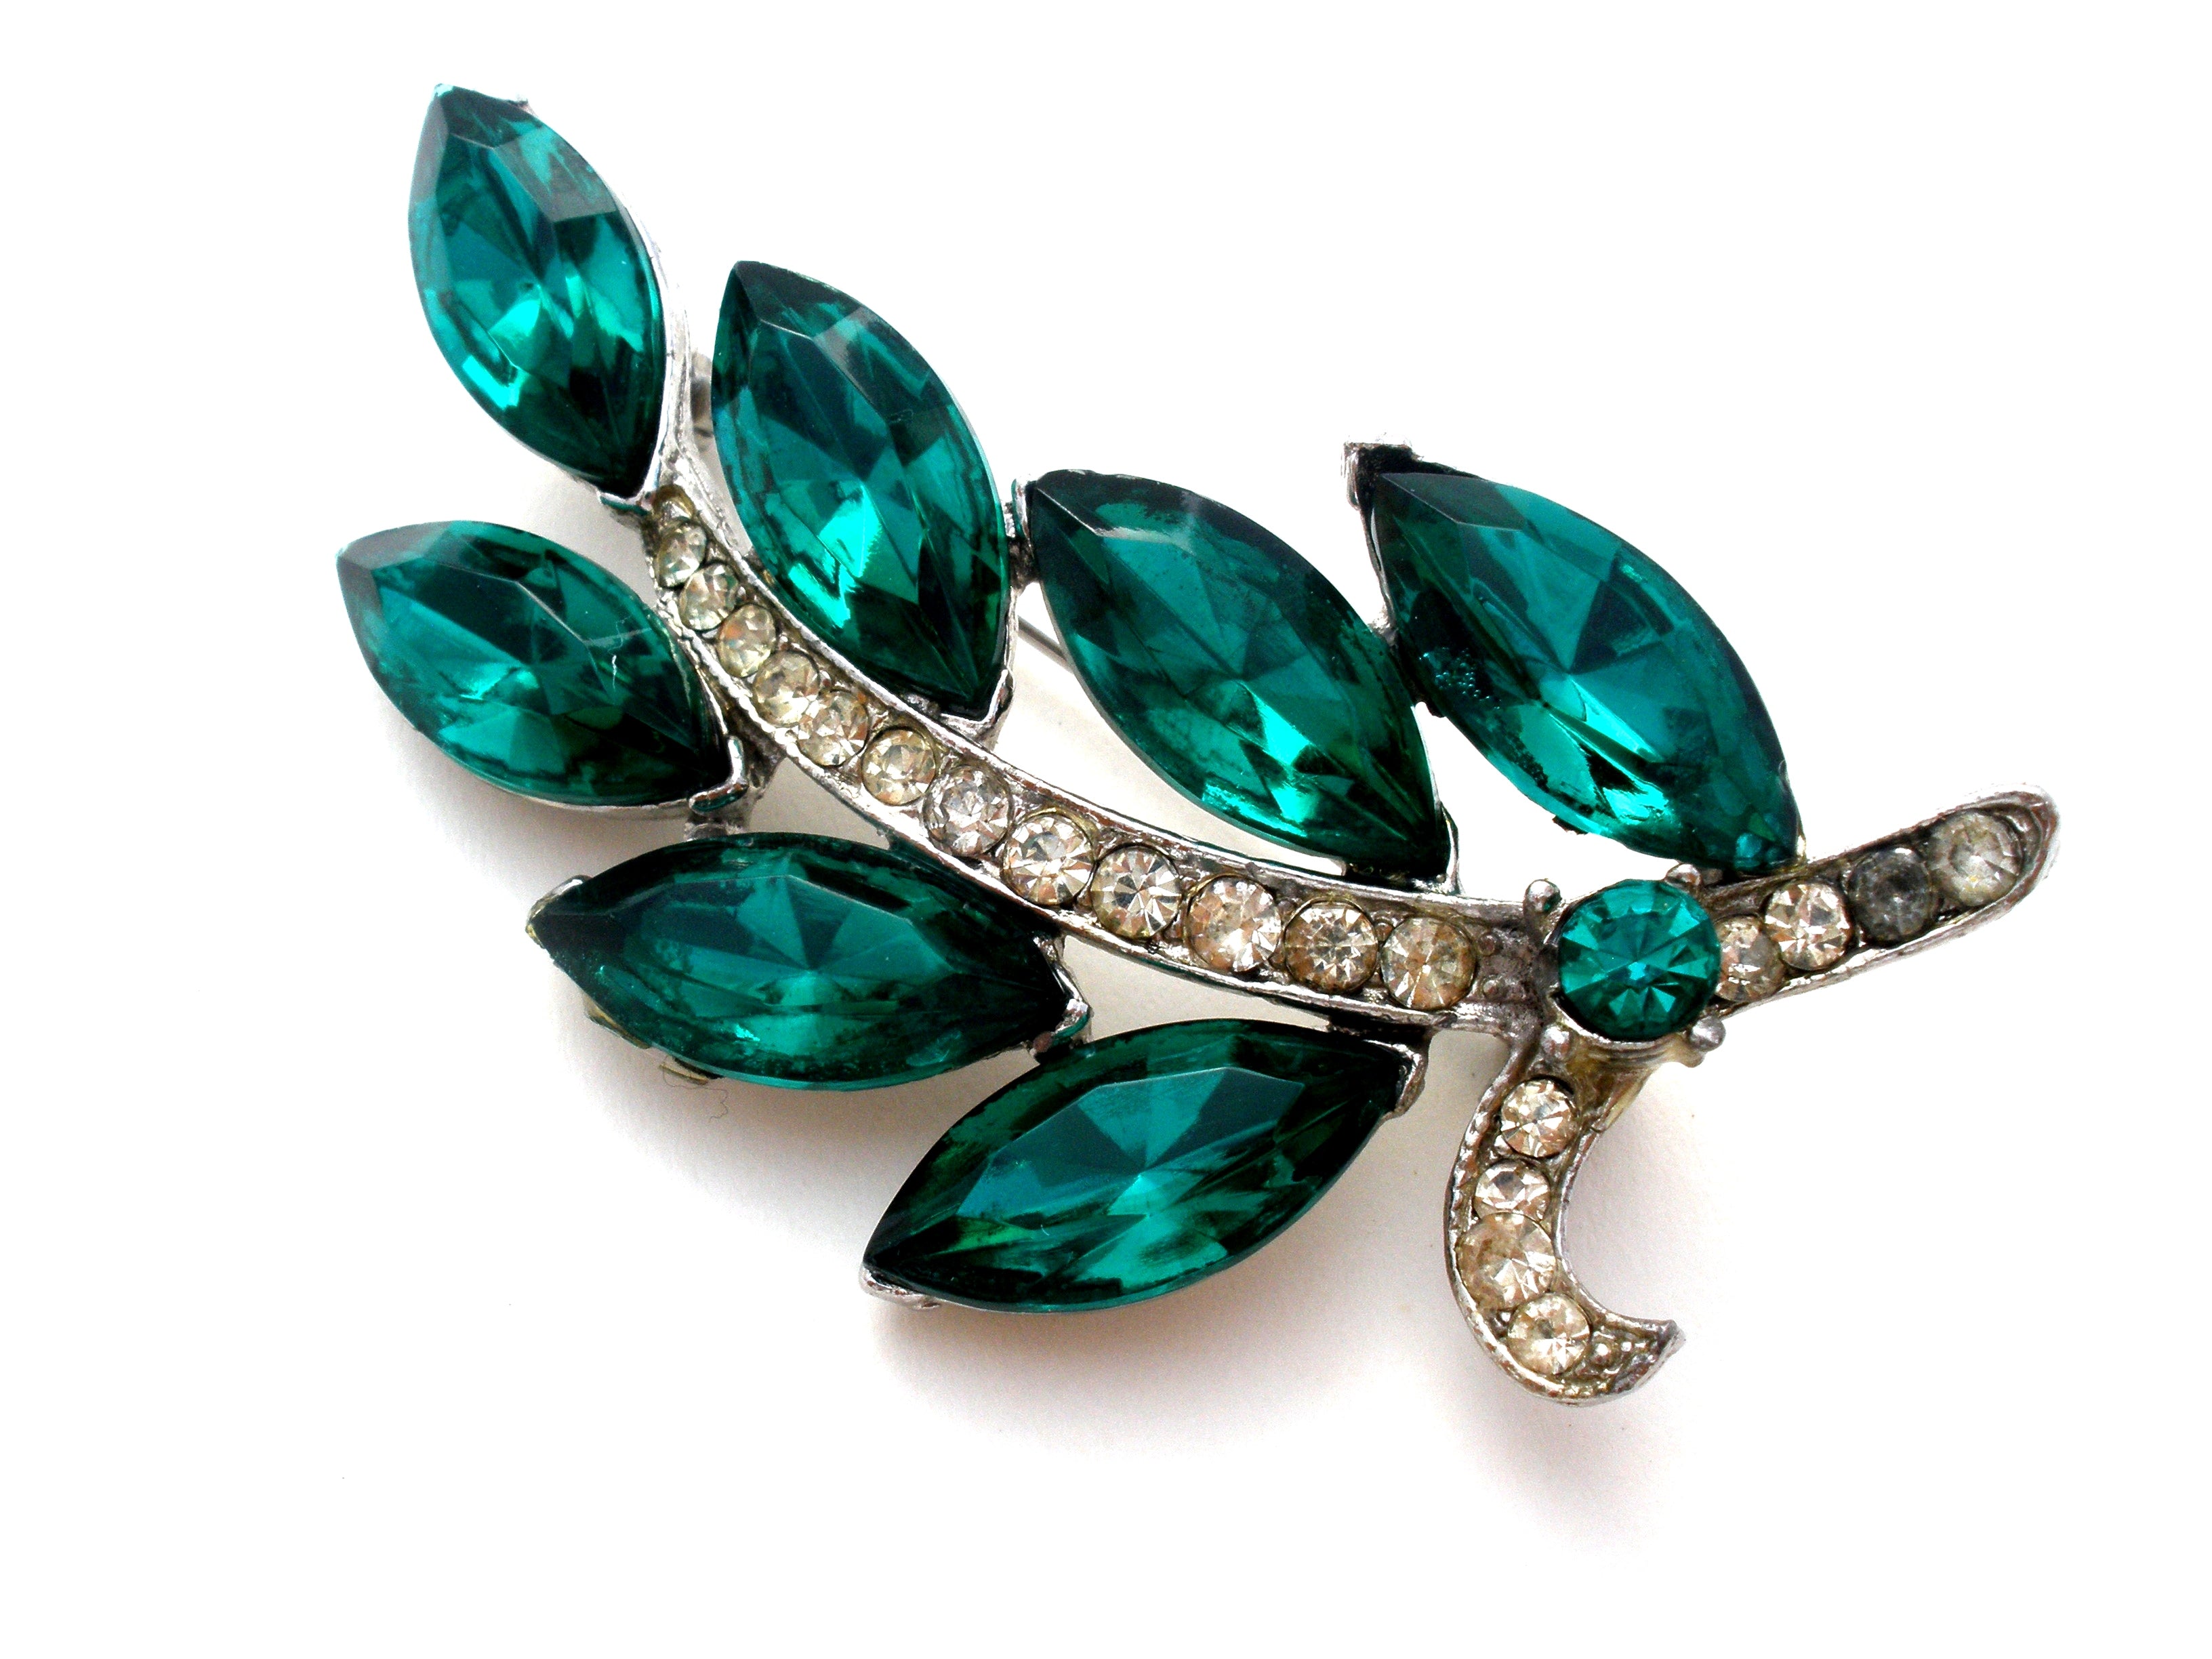 New Fashionable Jewelry Classic Crown Flower Drop Emerald Green Crystal Rhinestone  Brooch Pin Pendant